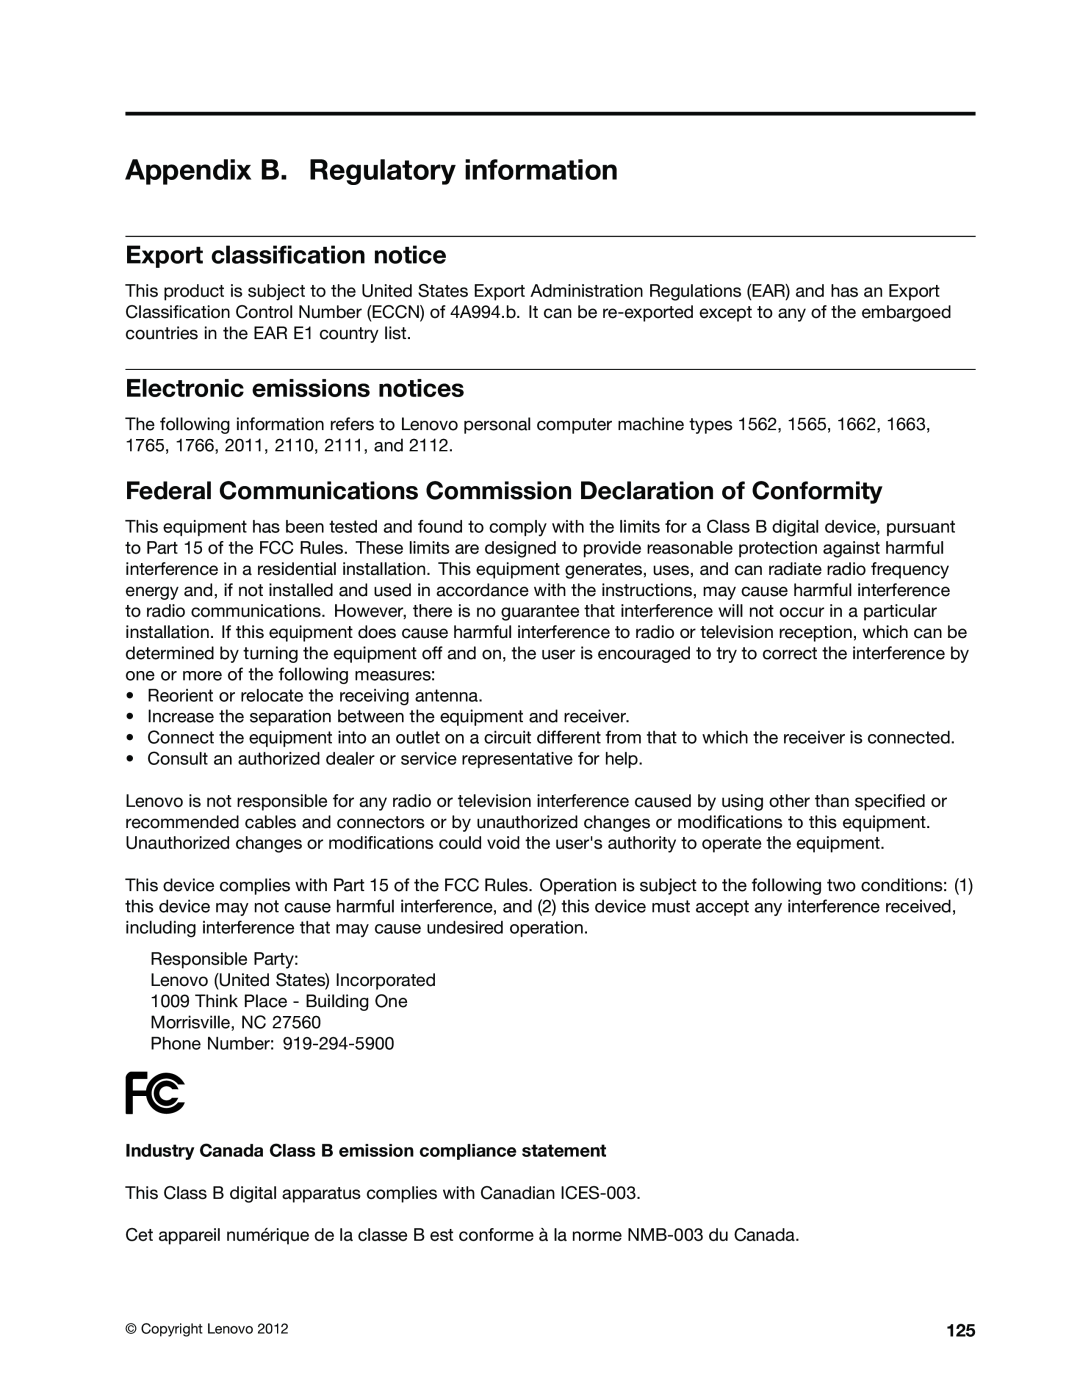 Lenovo 1562, 2112, 2111, 2110 Appendix B. Regulatory information, Export classification notice, Electronic emissions notices 